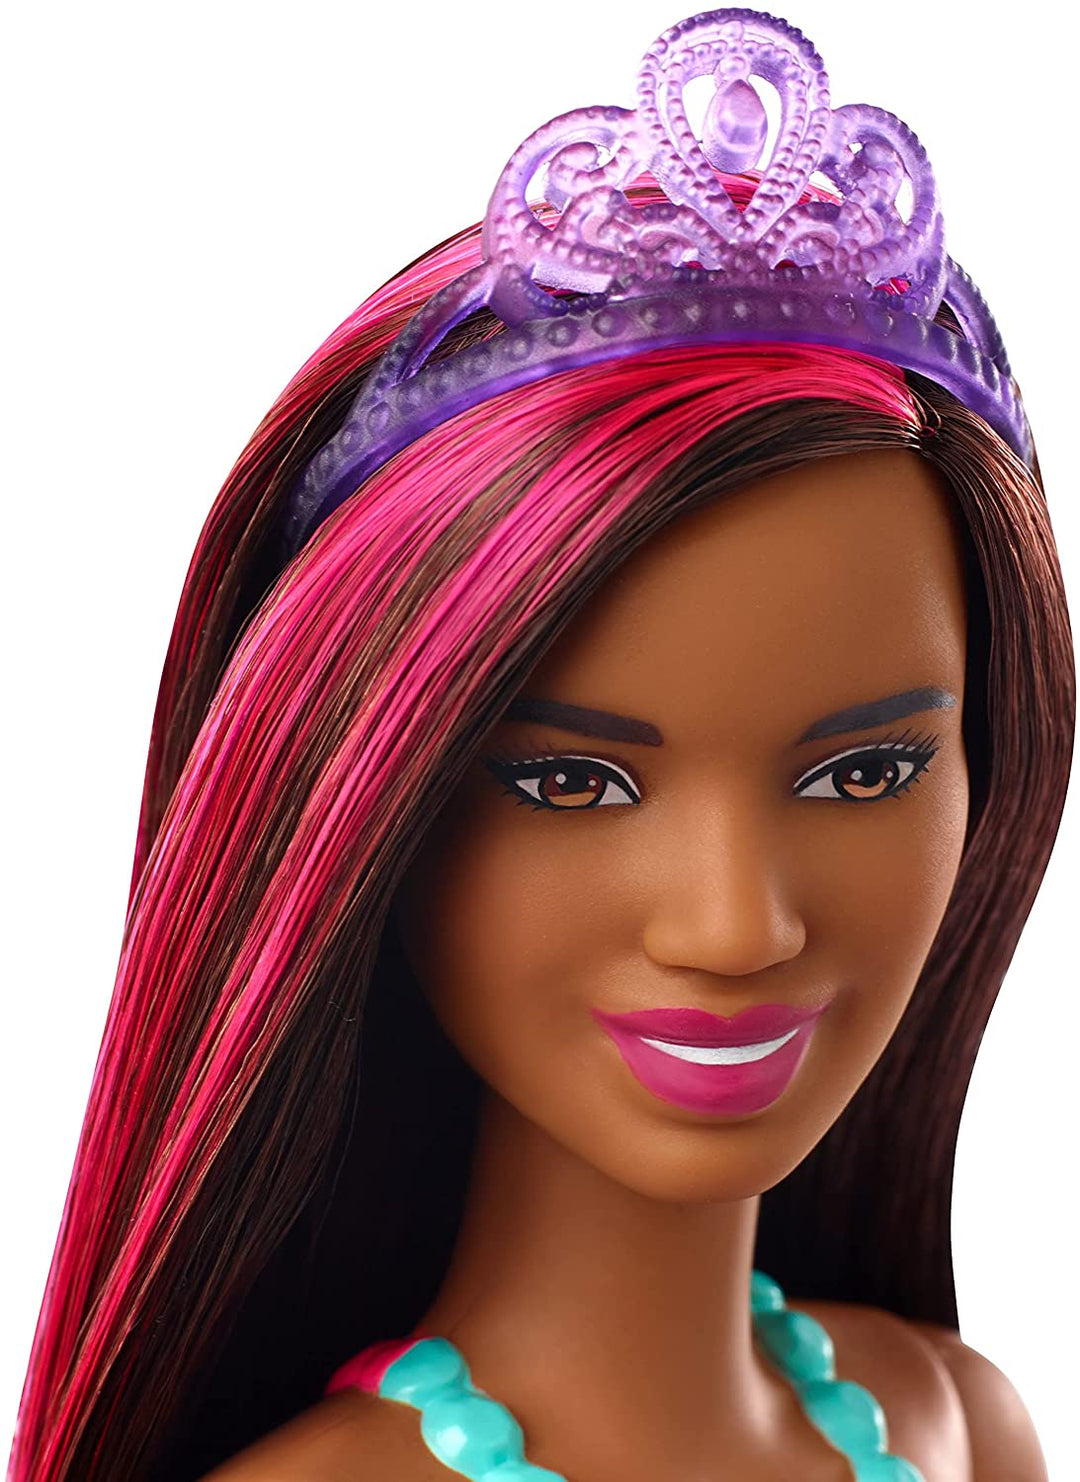 Barbie GJK15 Dreamtopia Princess Doll